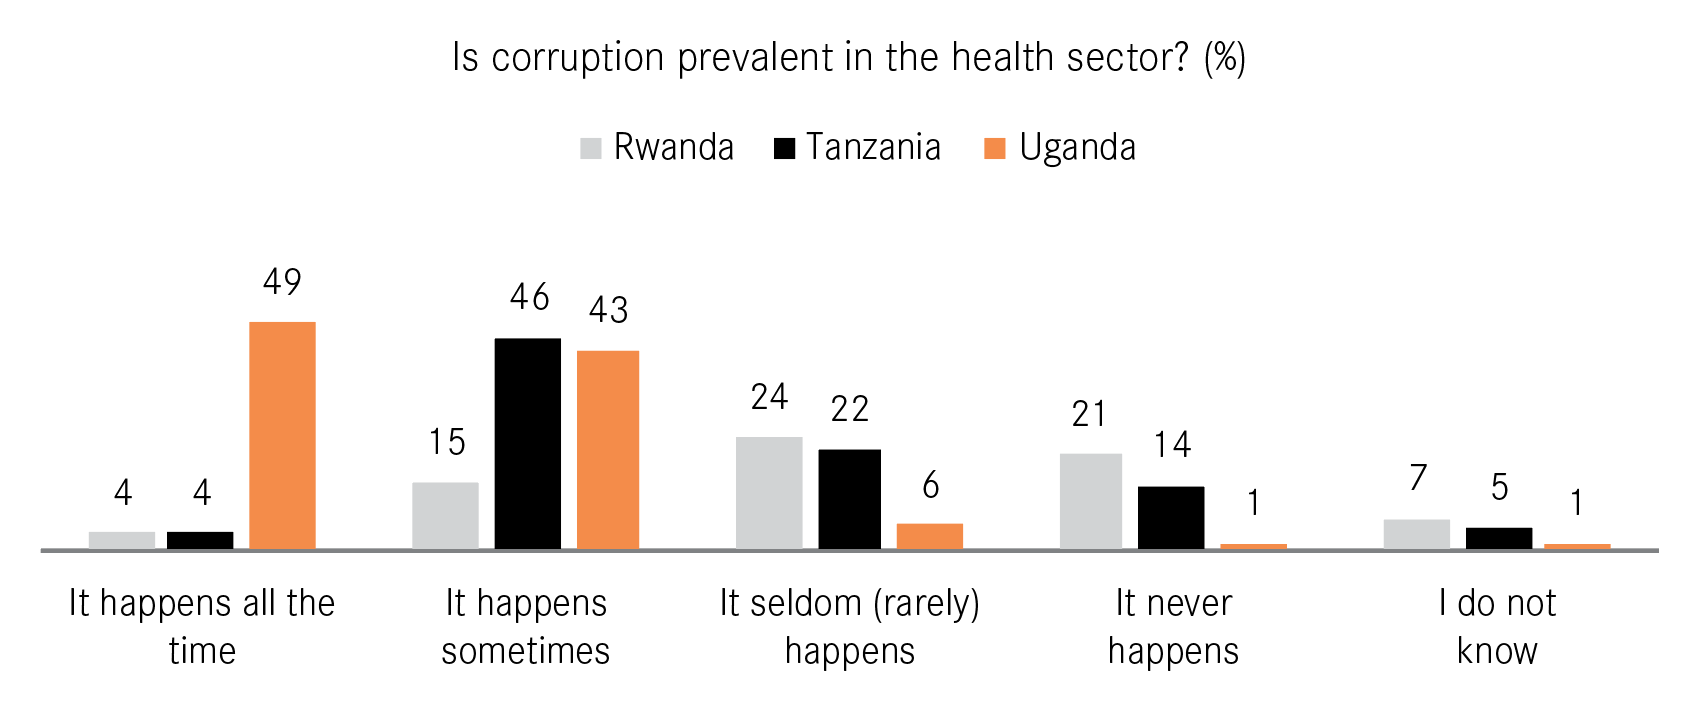 Figure 2: Perceived prevalence of corruption in the health sector in Rwanda, Tanzania and Uganda.